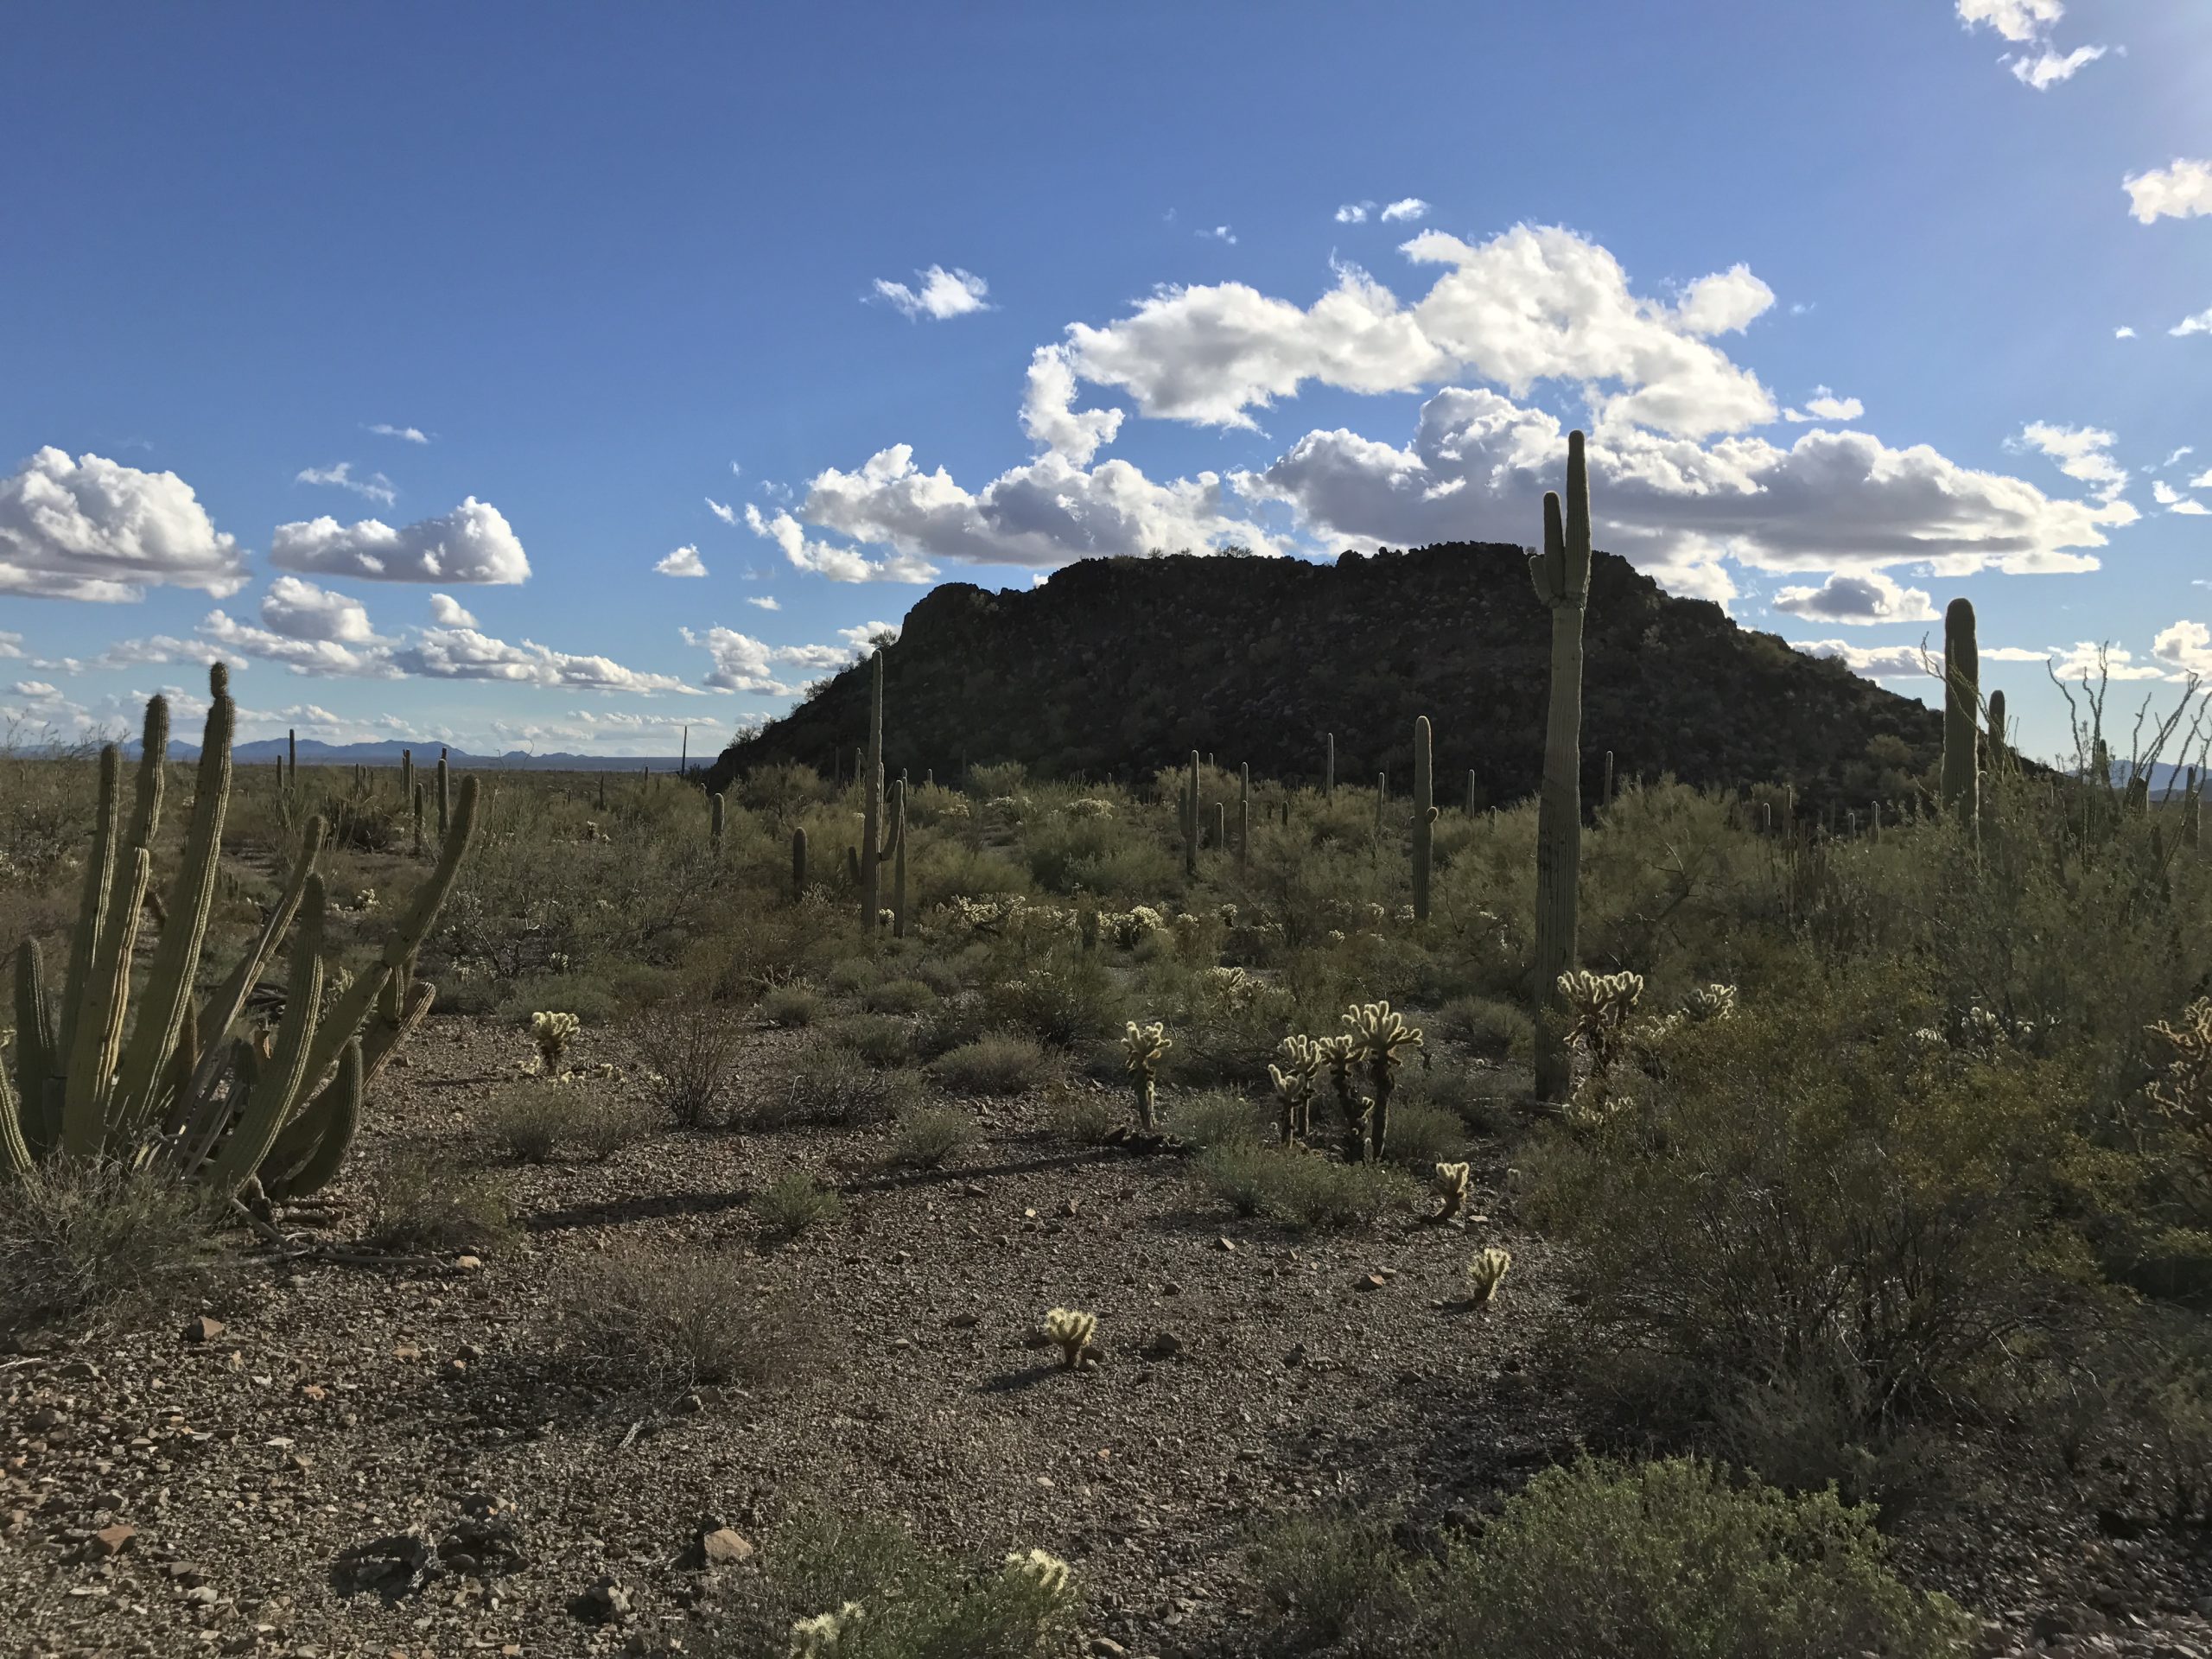 Saguaro cacti in front of a lone mountain throw long shadows toward an organ pipe cactus